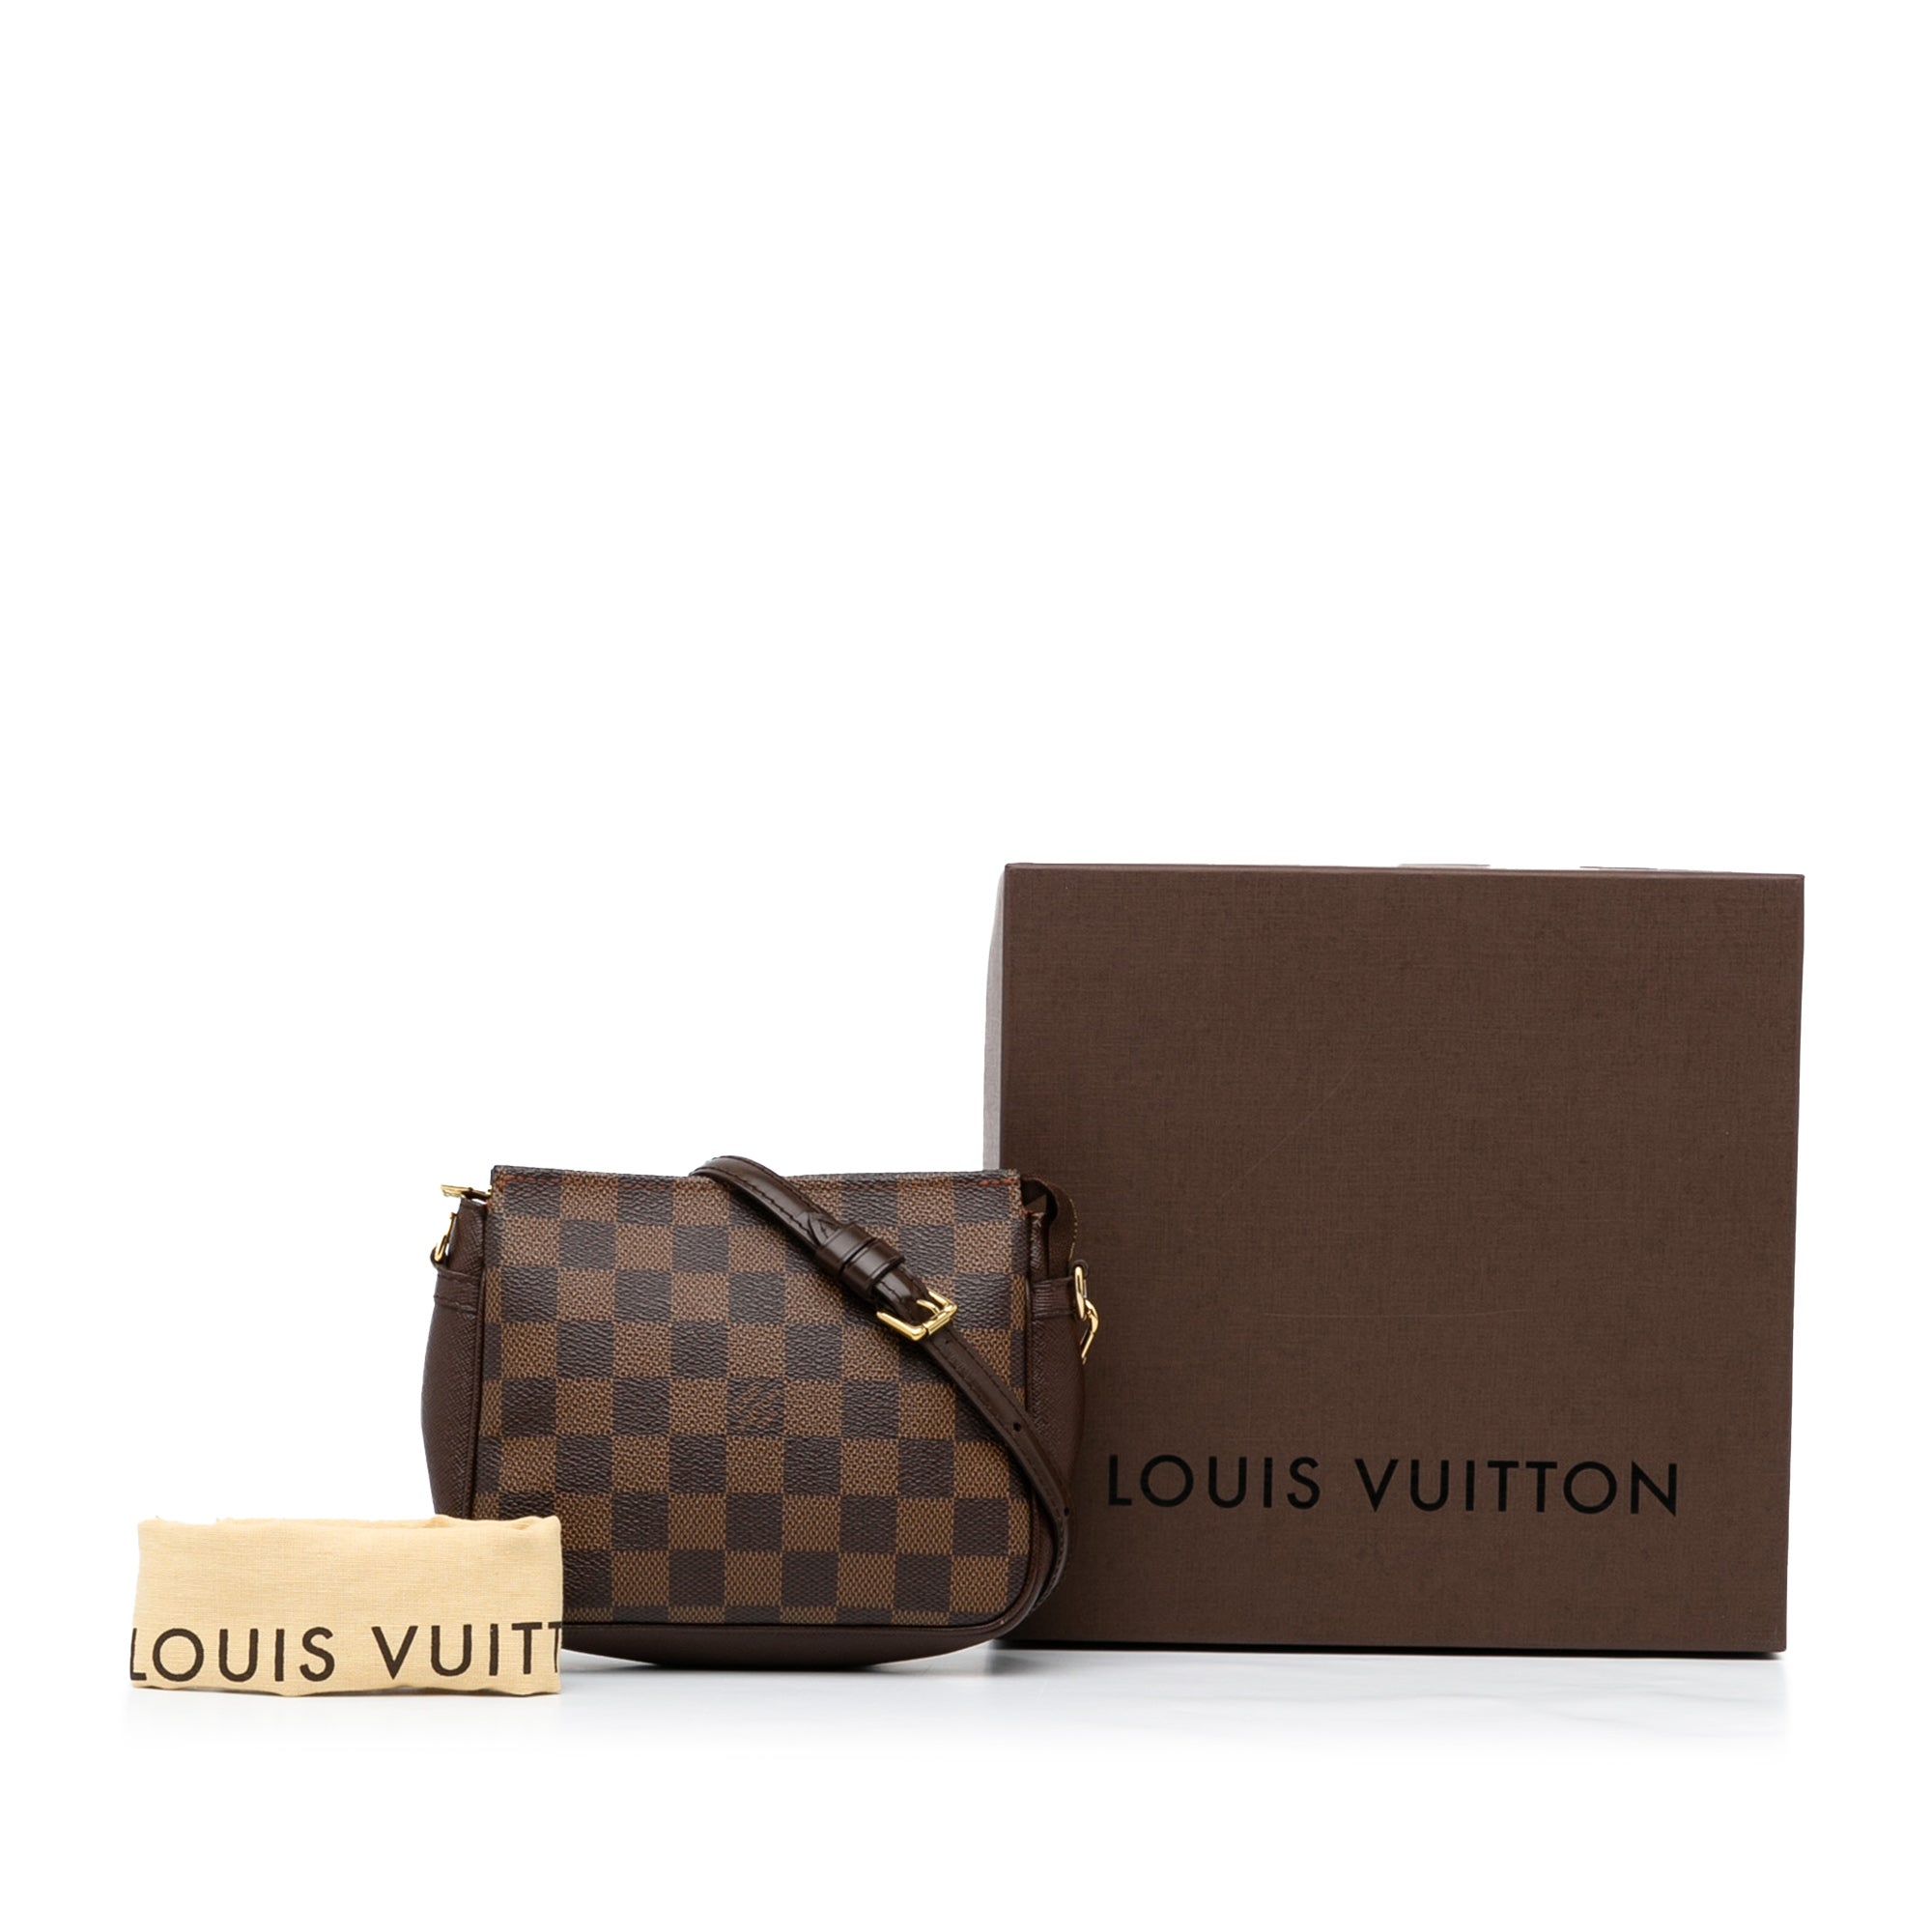 Louis Vuitton Trousse Pochette in Damier Ebene - SOLD